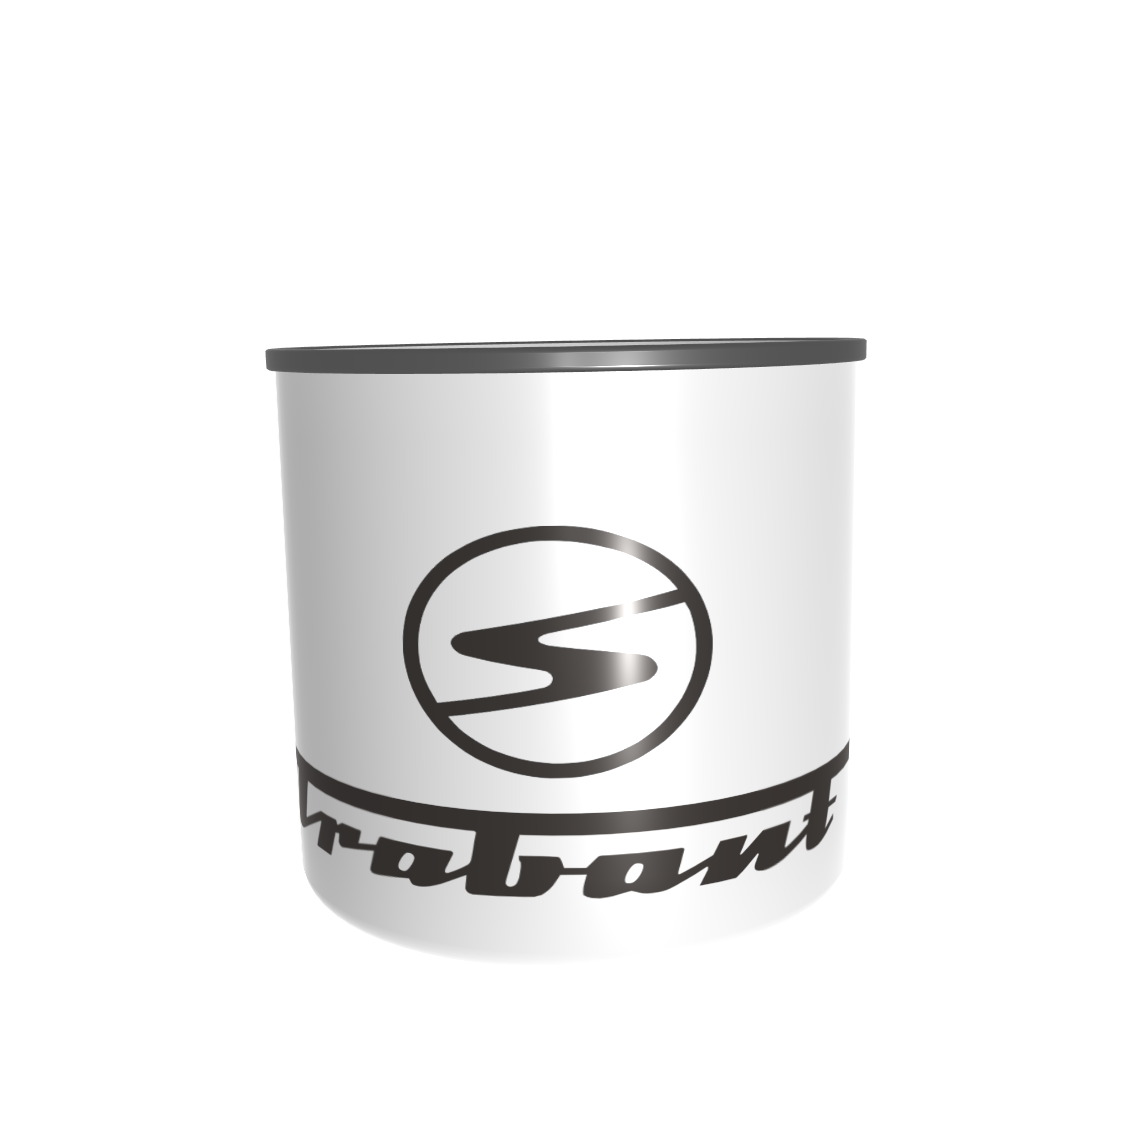 Emailletasse / Tasse IFA Trabant Sachsenring Logo